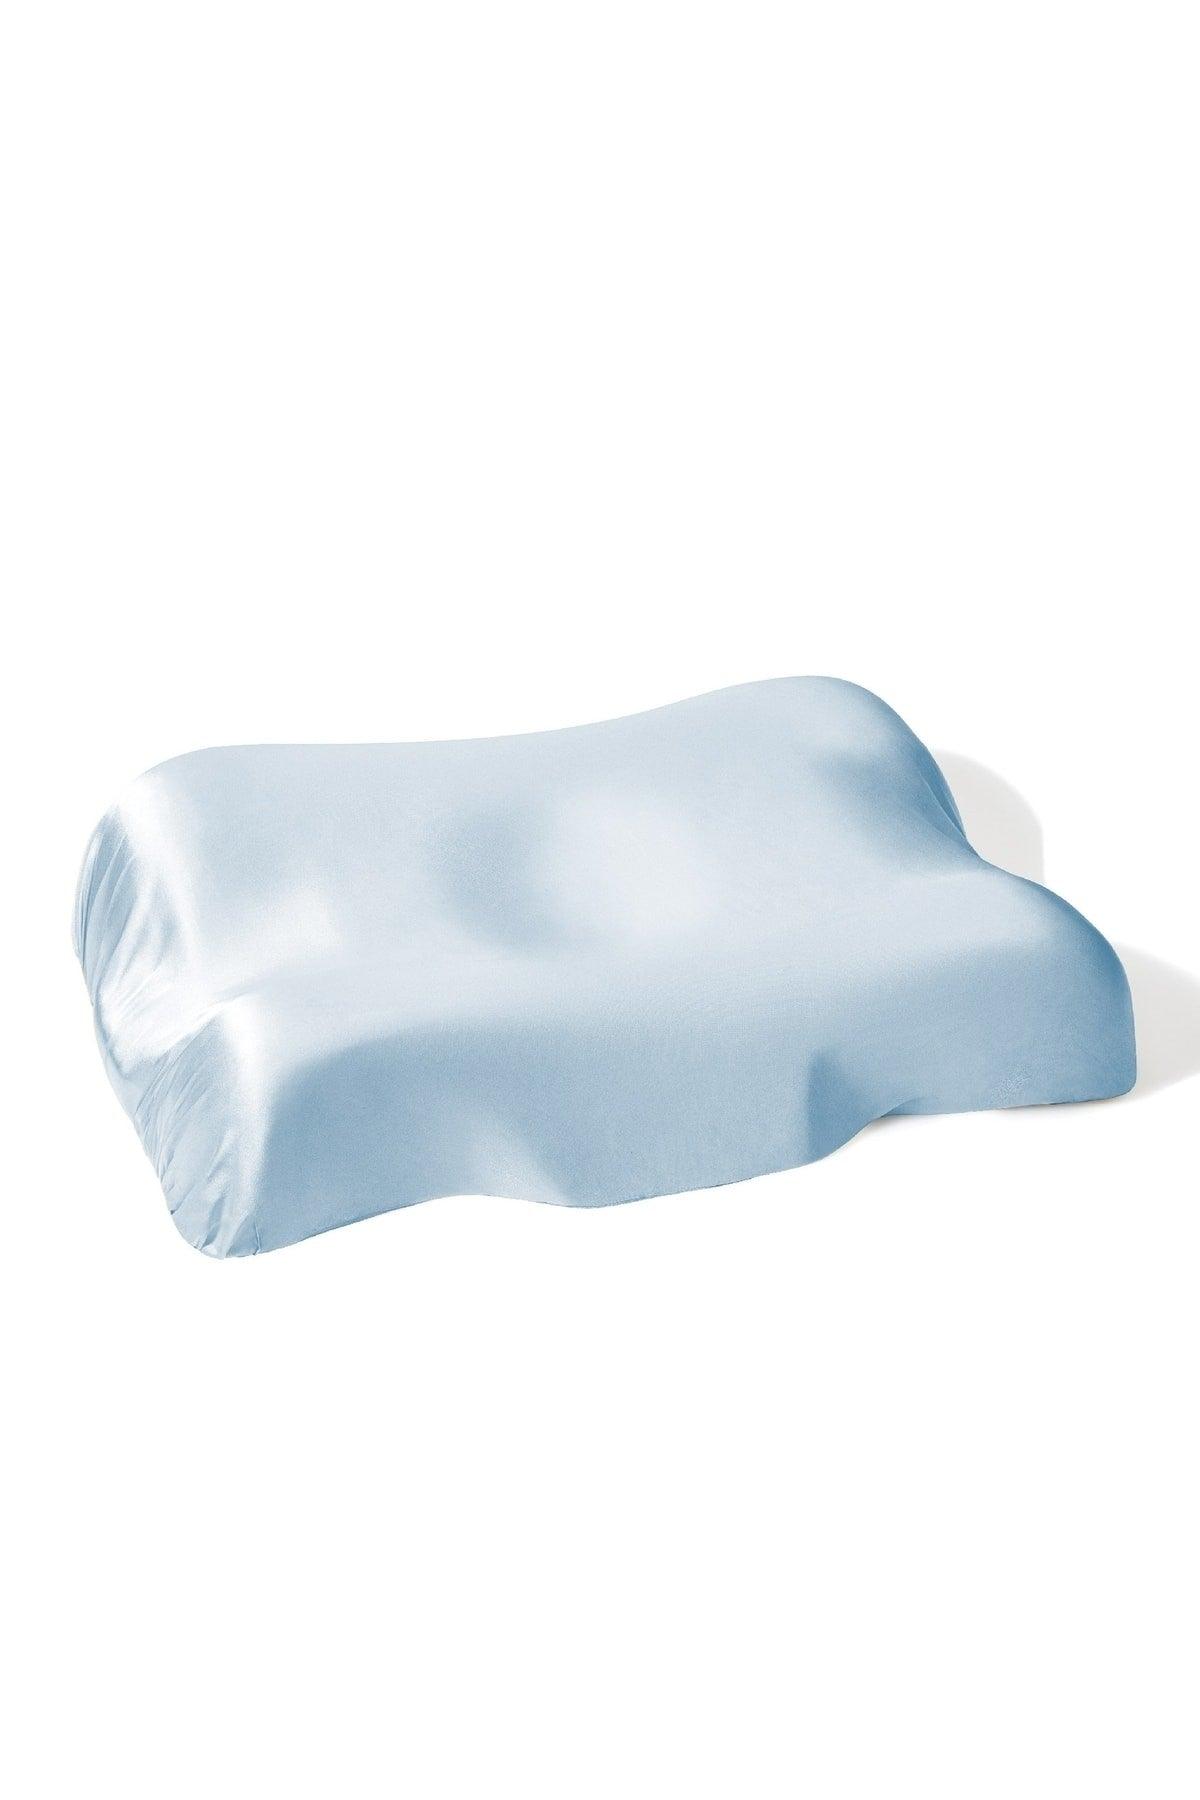 100% Silk Pillow Cover Blue Color - Swordslife